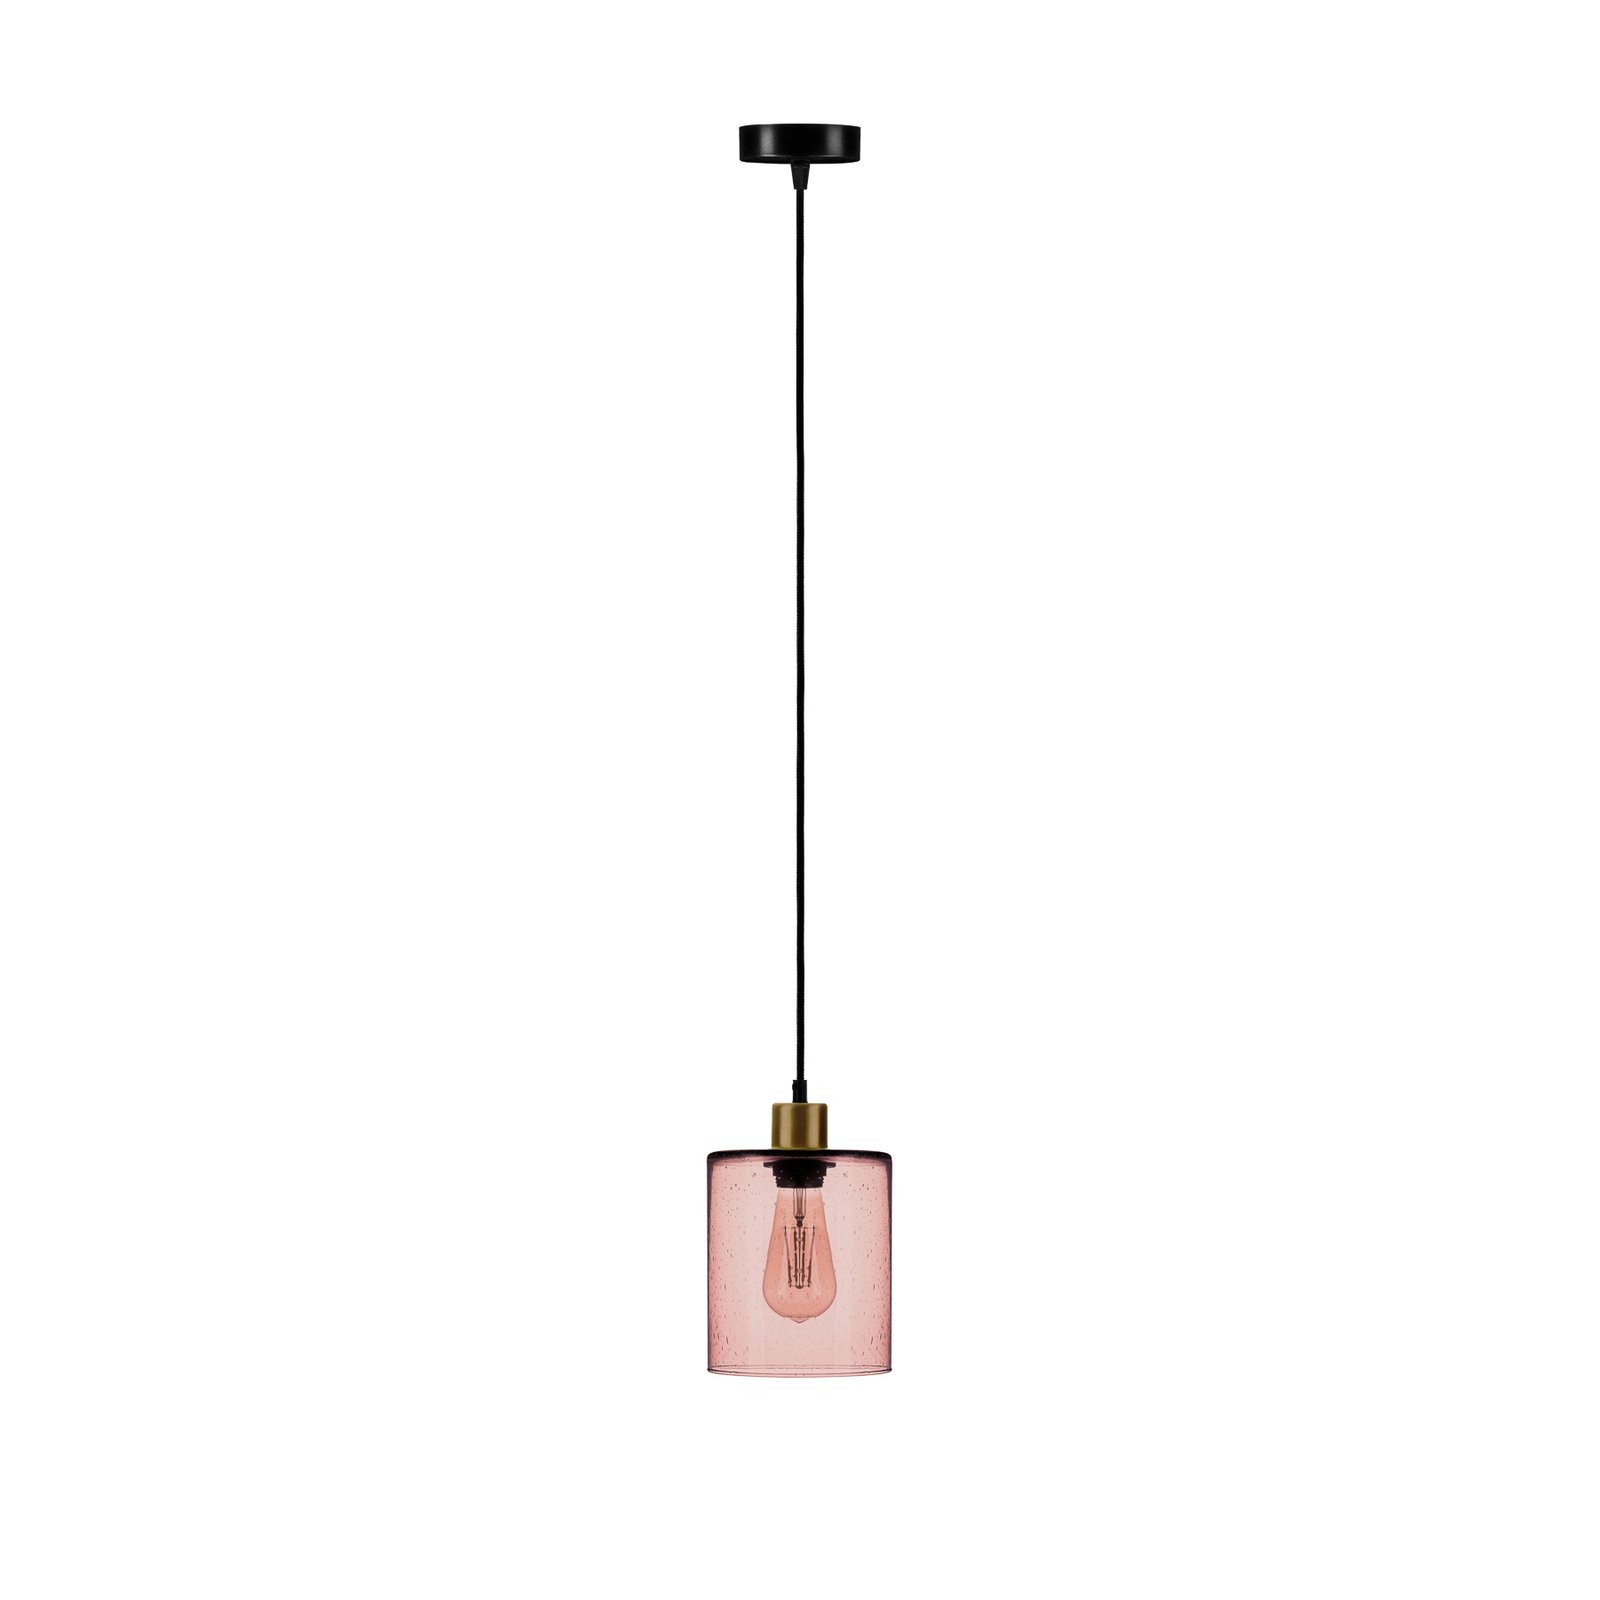 Soda hanging light with rose glass shade Ø 15cm